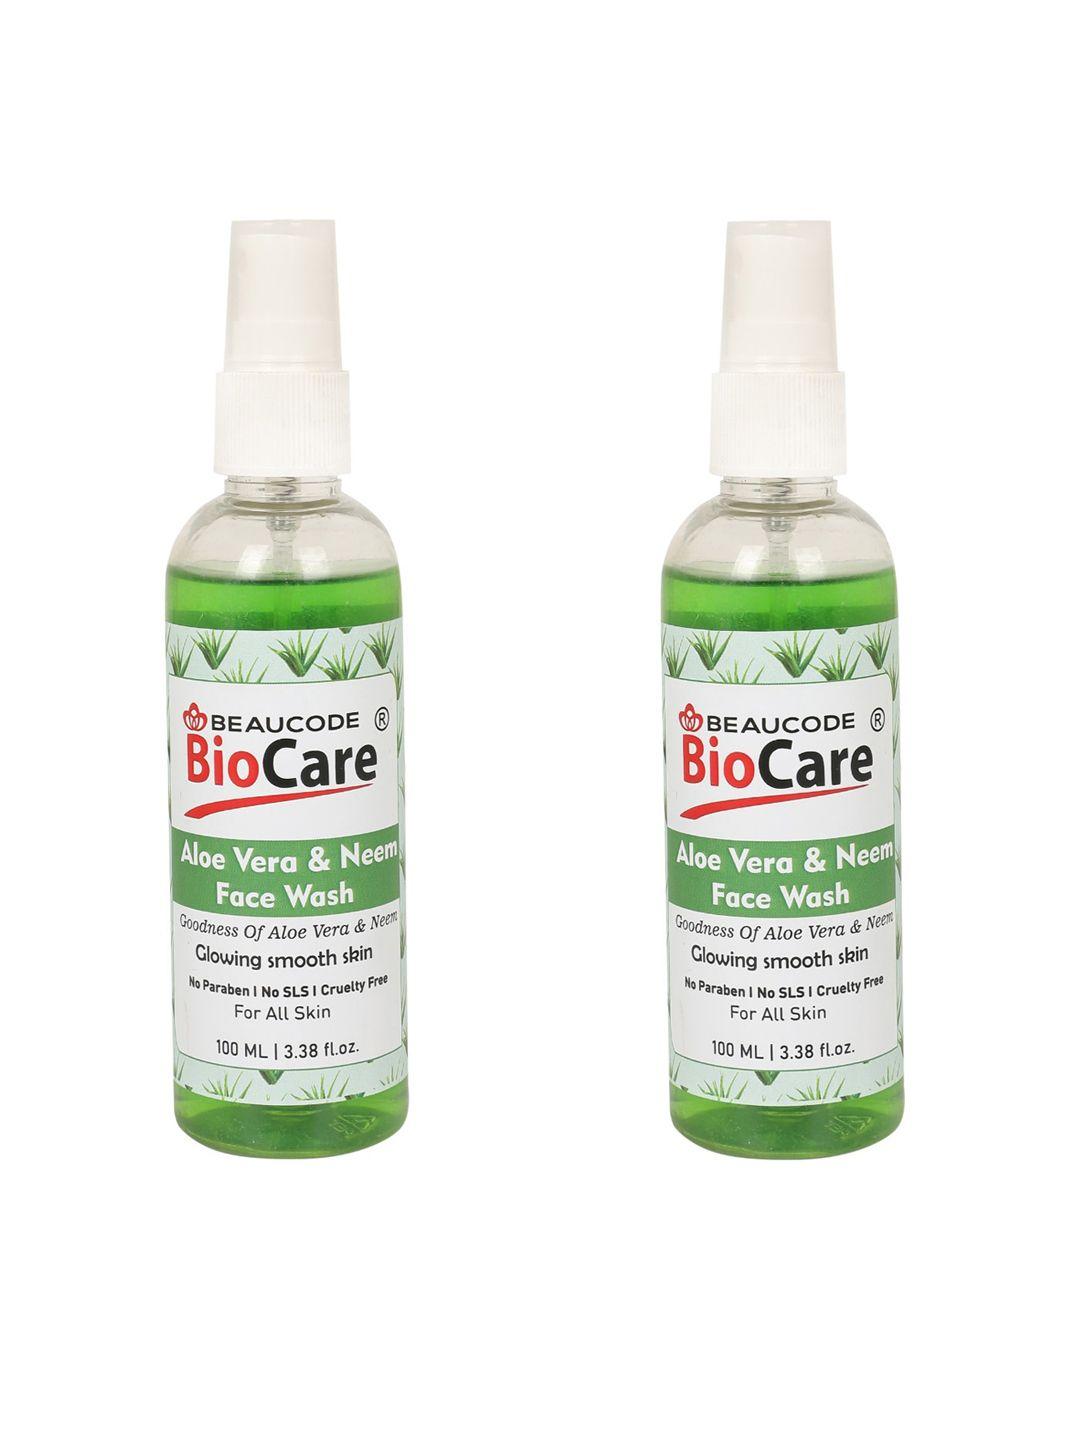 beaucode biocare set of 2 aloe vera & neem face wash - 100ml each